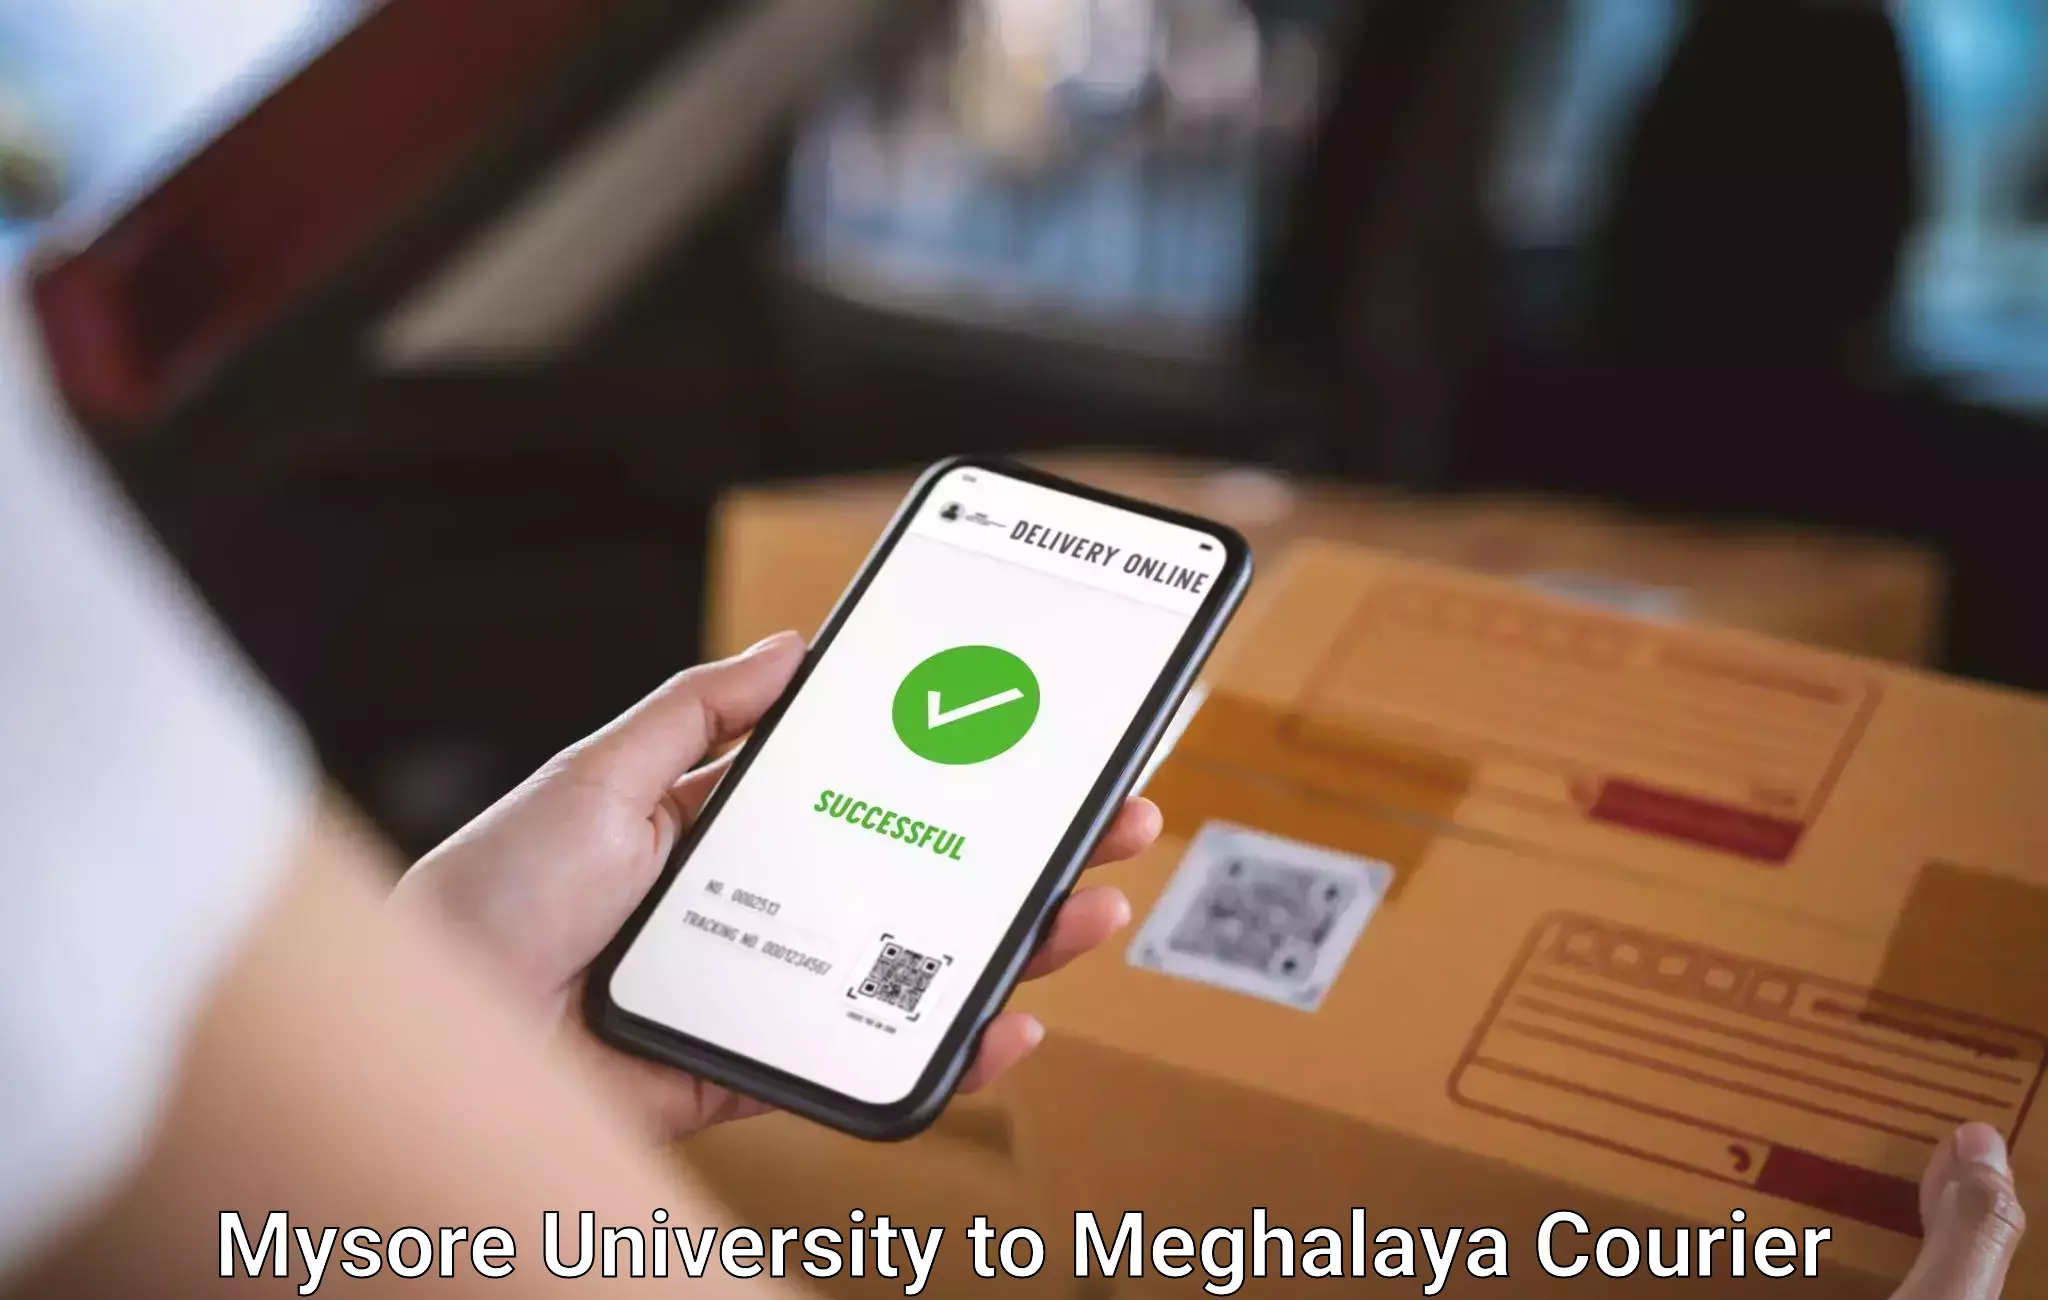 Baggage relocation service Mysore University to Meghalaya